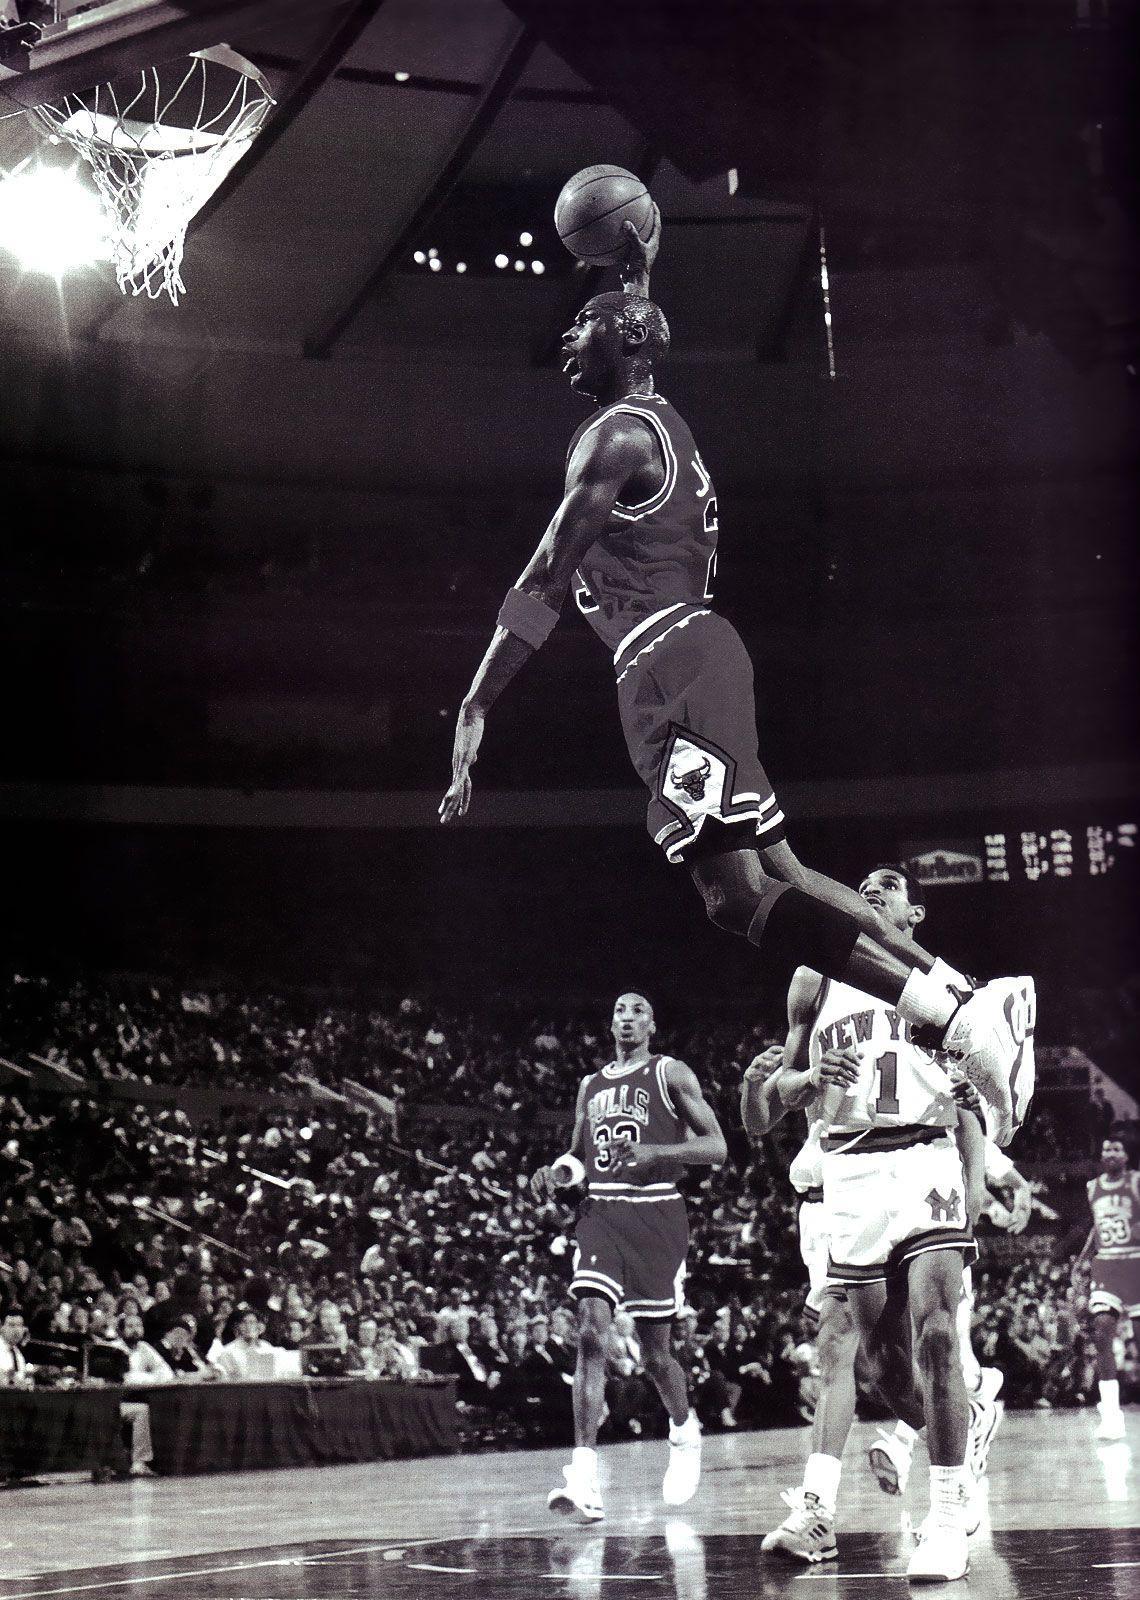 Michael Jordan Dunk 44 116519 Image HD Wallpaper. Wallfoy.com